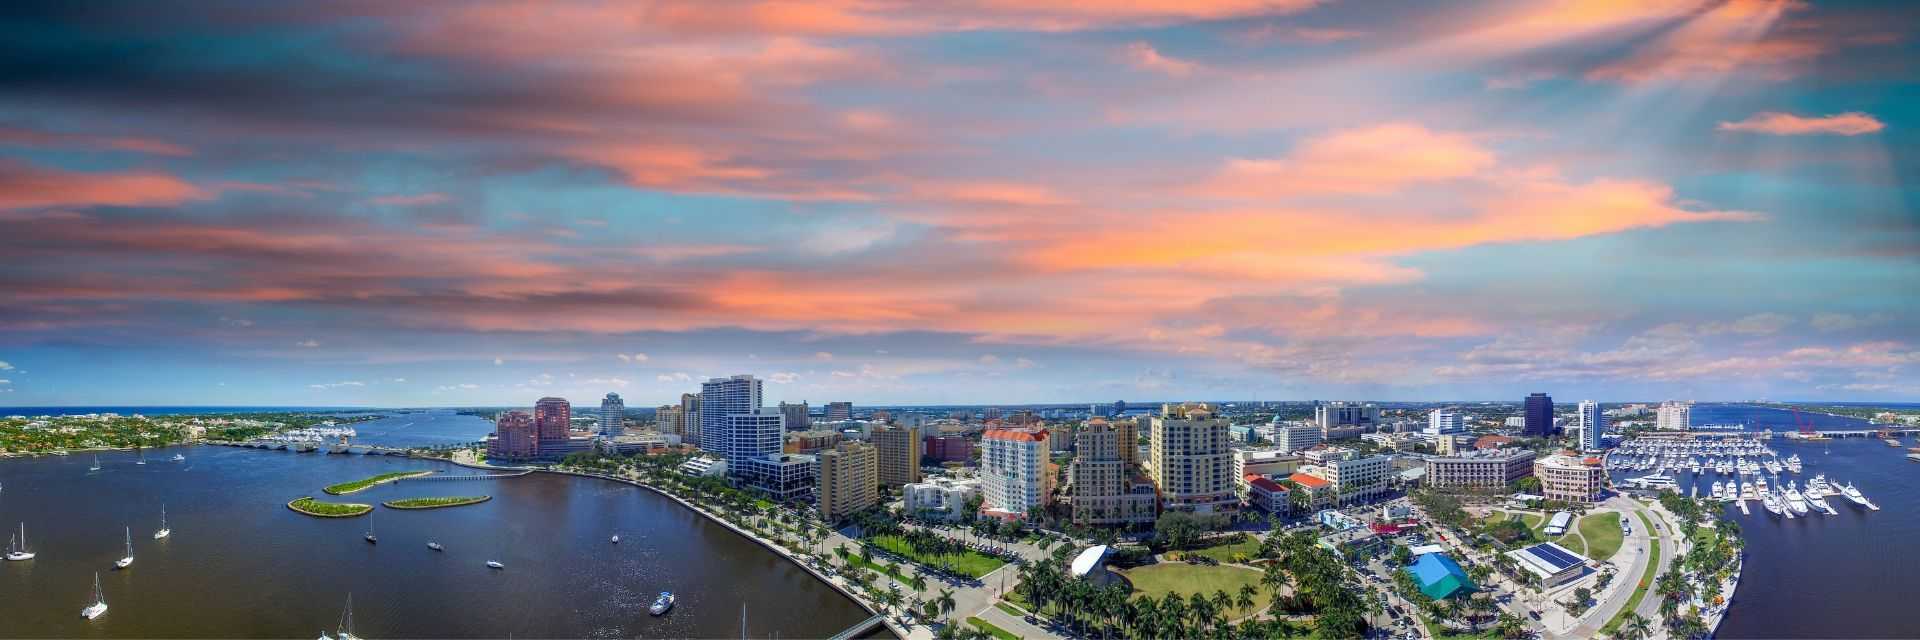 View of West Palm Beach, FL